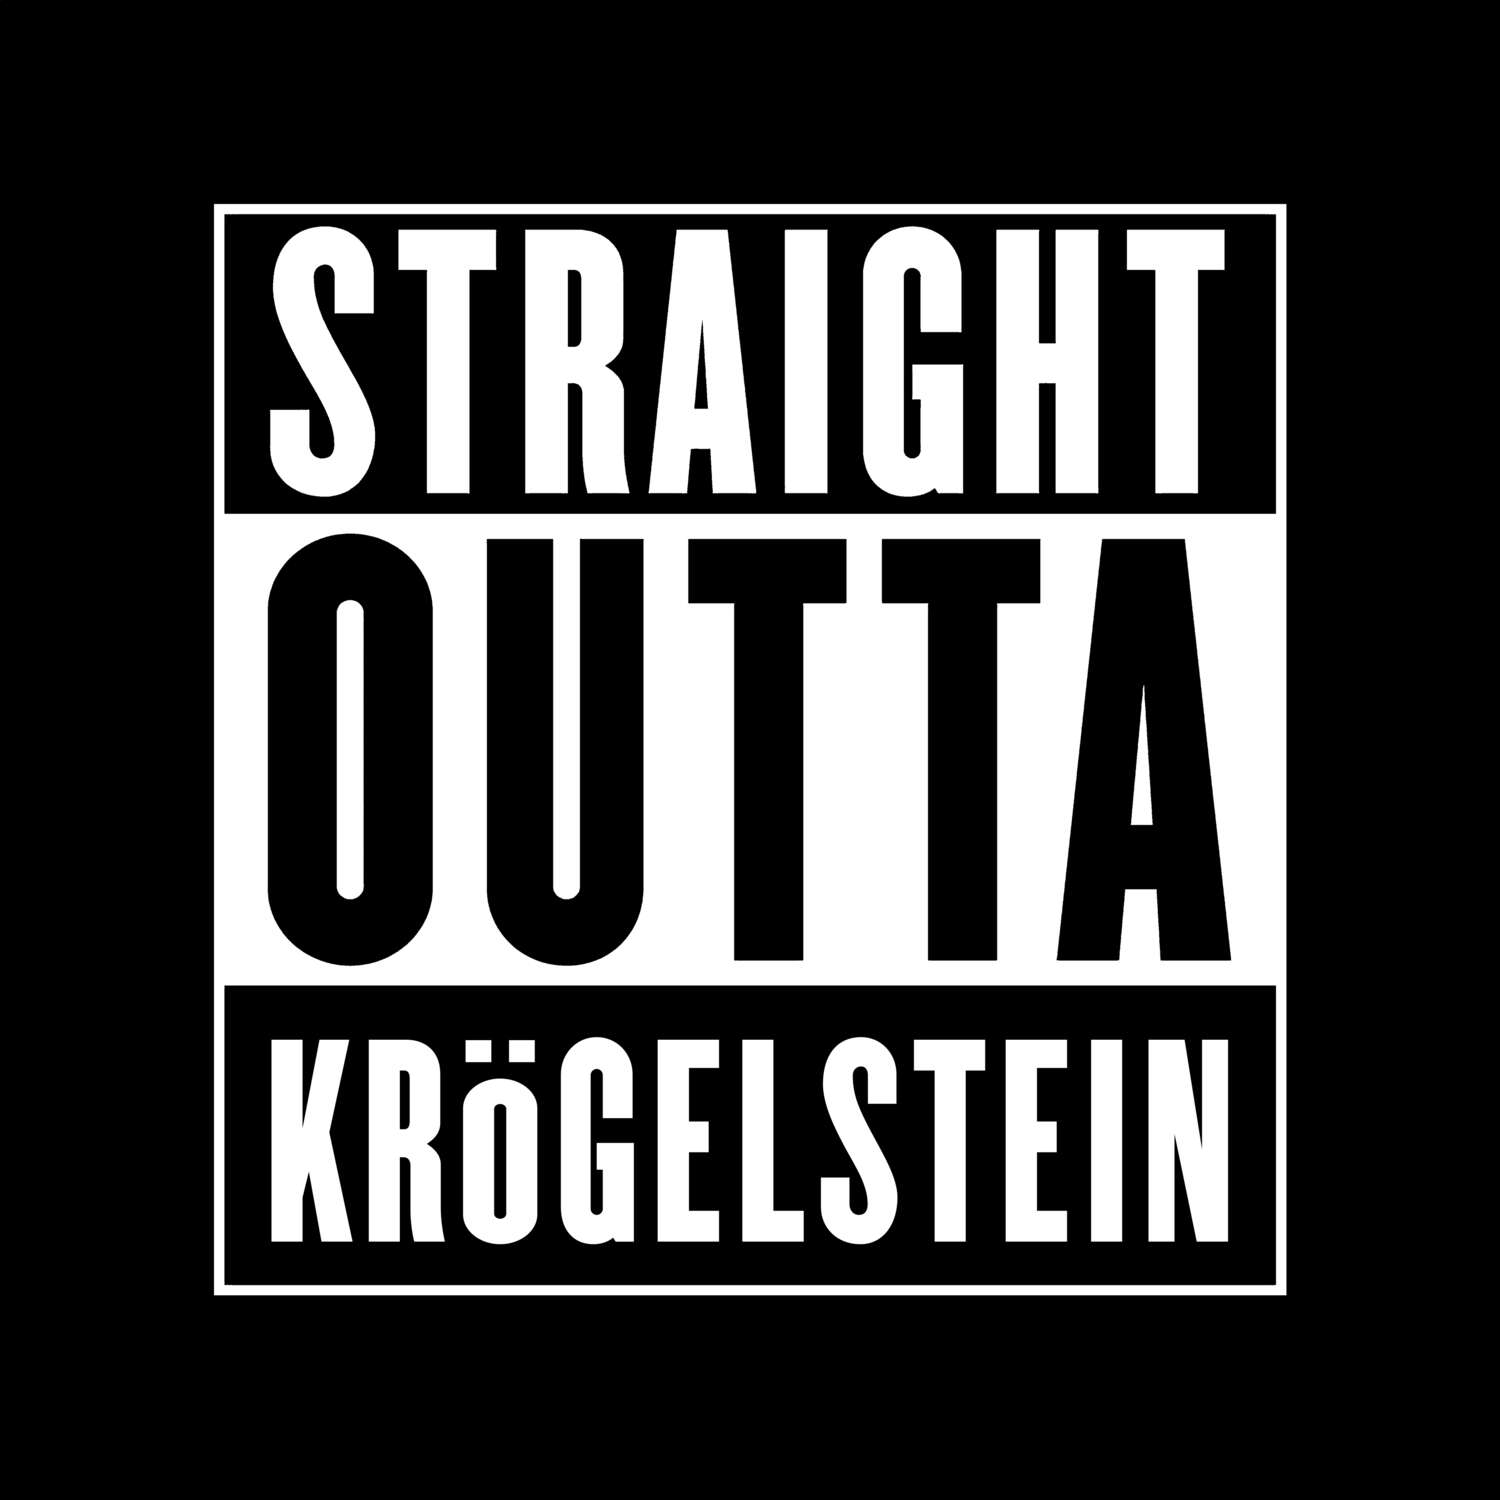 Krögelstein T-Shirt »Straight Outta«